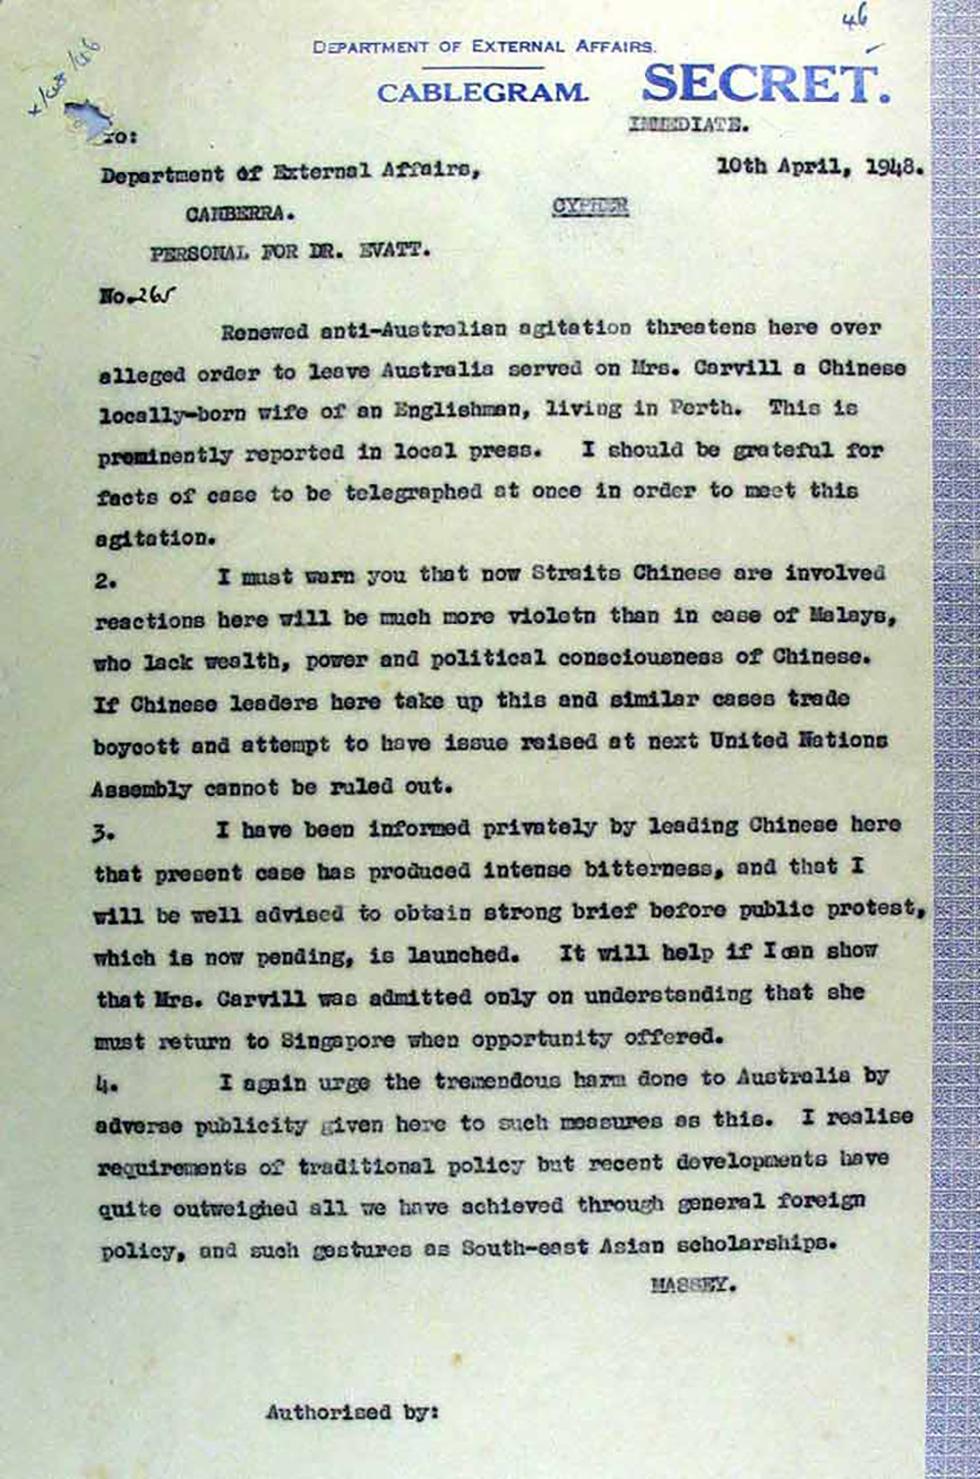 Cablegram addressed to Dr. Evatt regarding anti-Australian agitation.